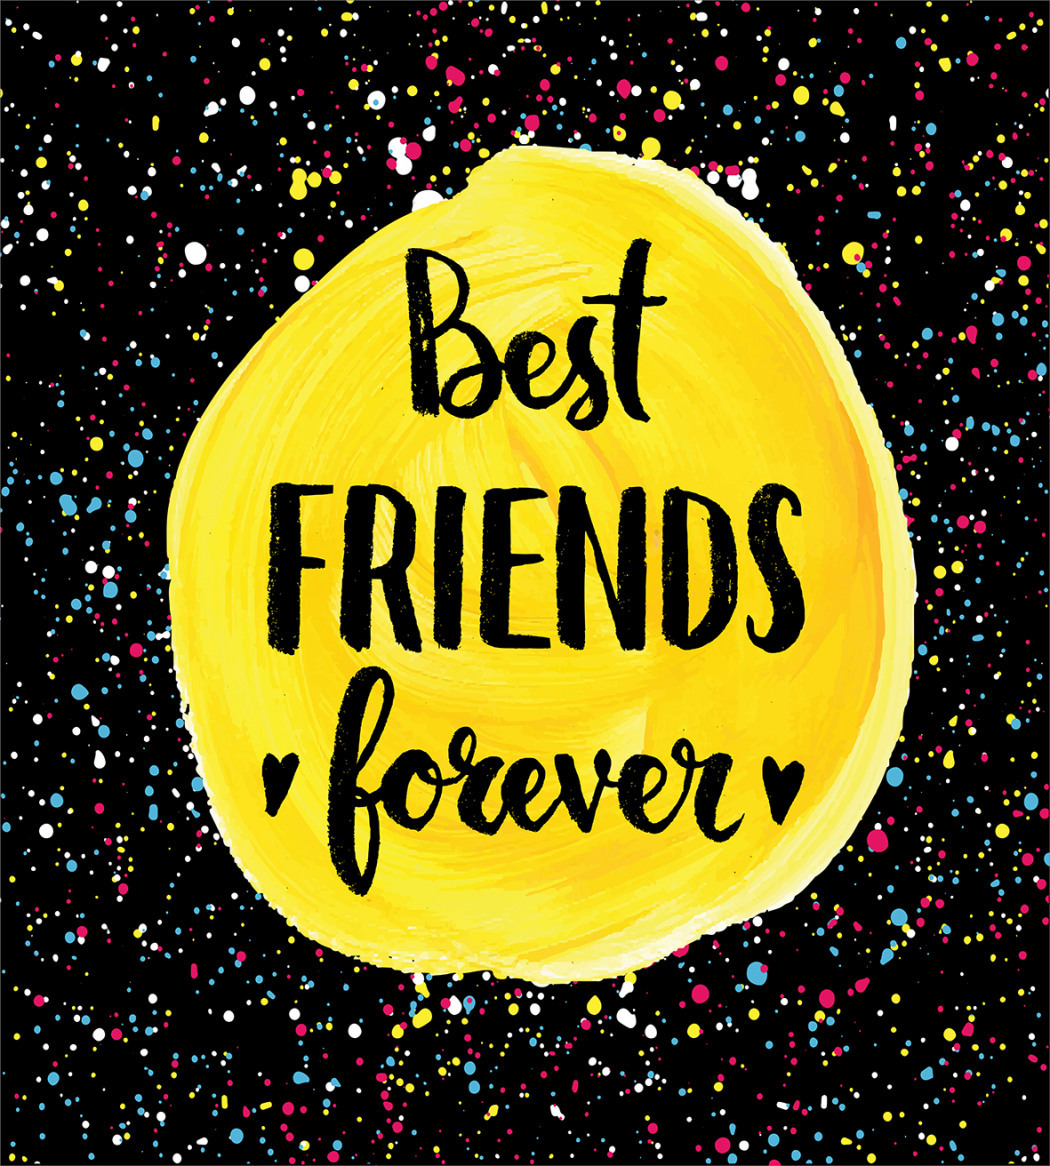 Best friends Forever надпись